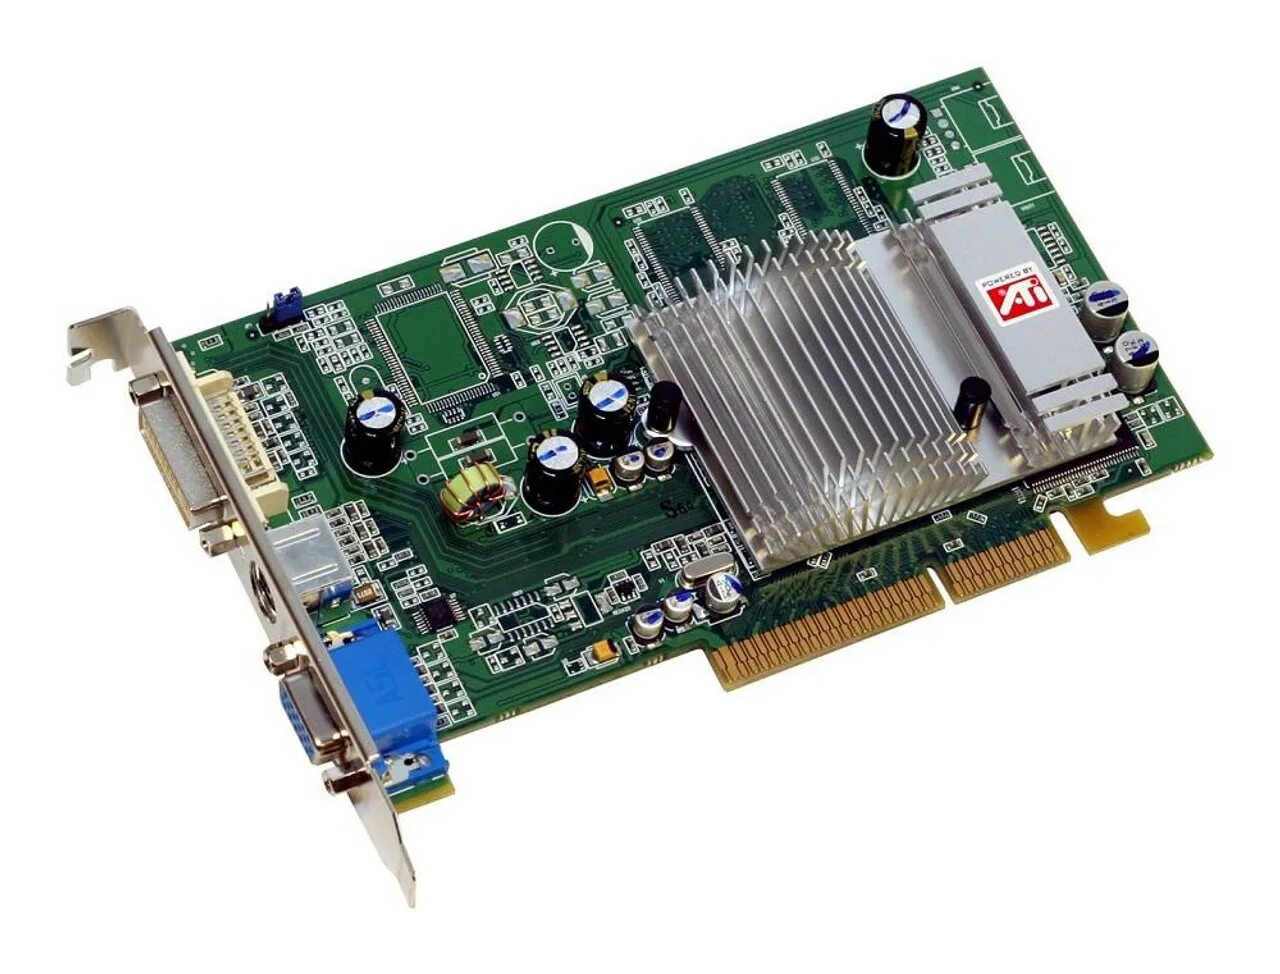 Ati radeon 9600. Видеокарта ATI Radeon 9600 Pro. Sapphire Radeon 9600. Sapphire Atlantis Radeon 9600. Видеокарта Sapphire Radeon 9600 Pro.